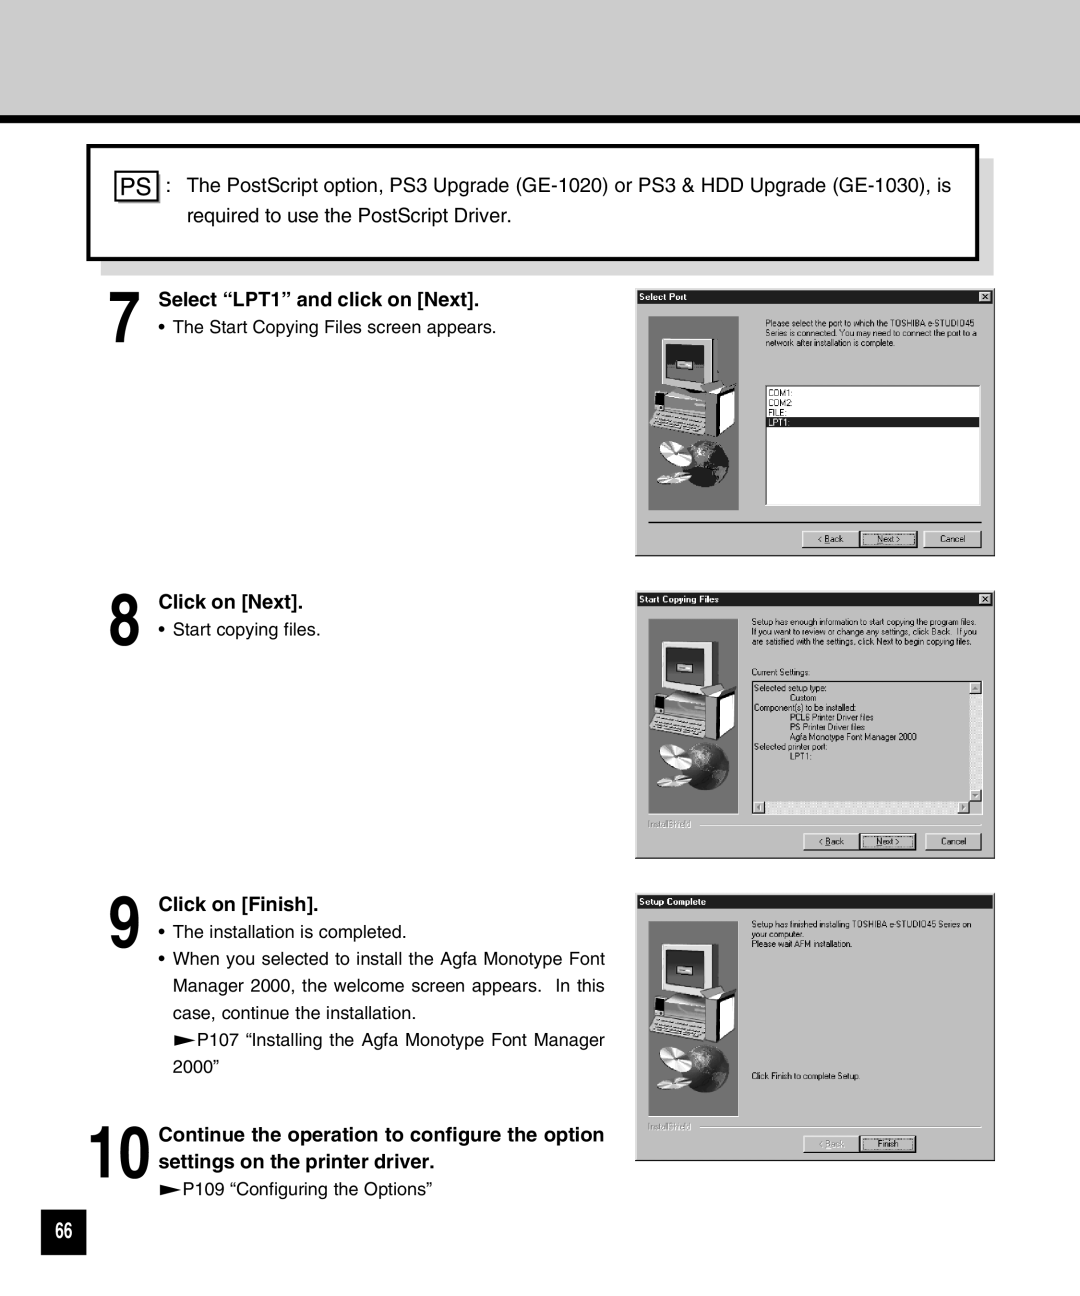 Toshiba GA-1040 manual Select “LPT1” and click on Next, Click on Next, Click on Finish, Start copying files 